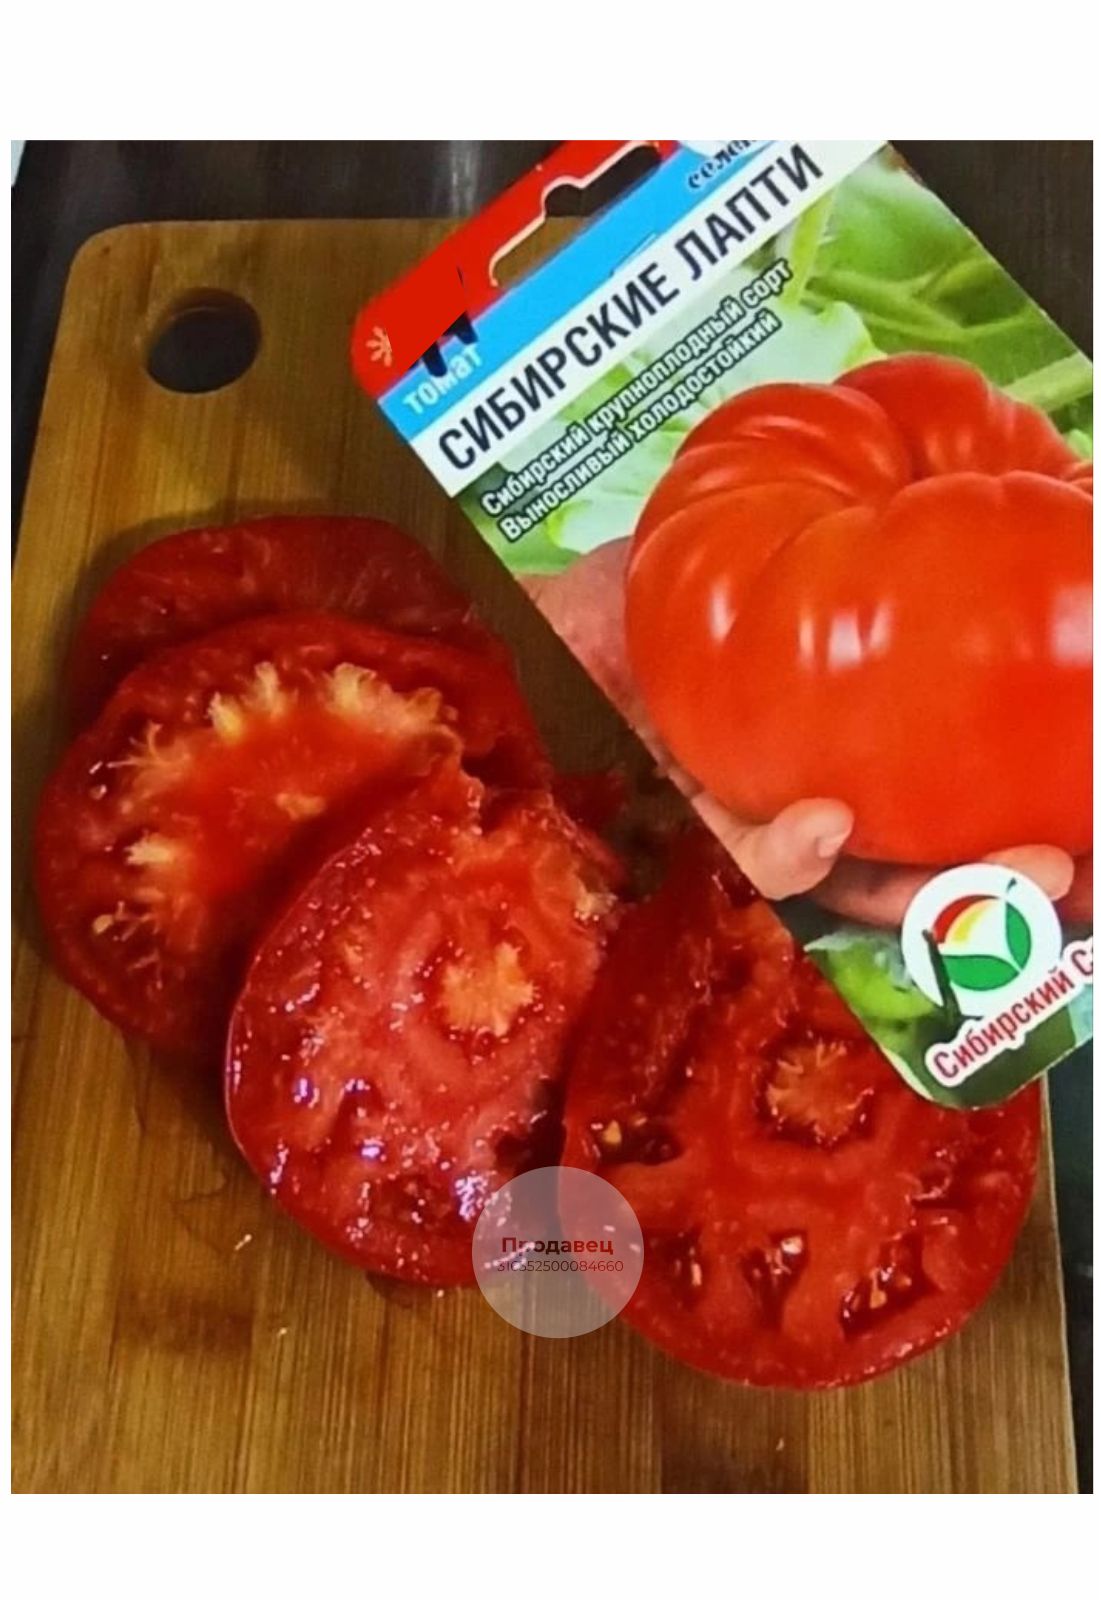 помидоры сибирские фото